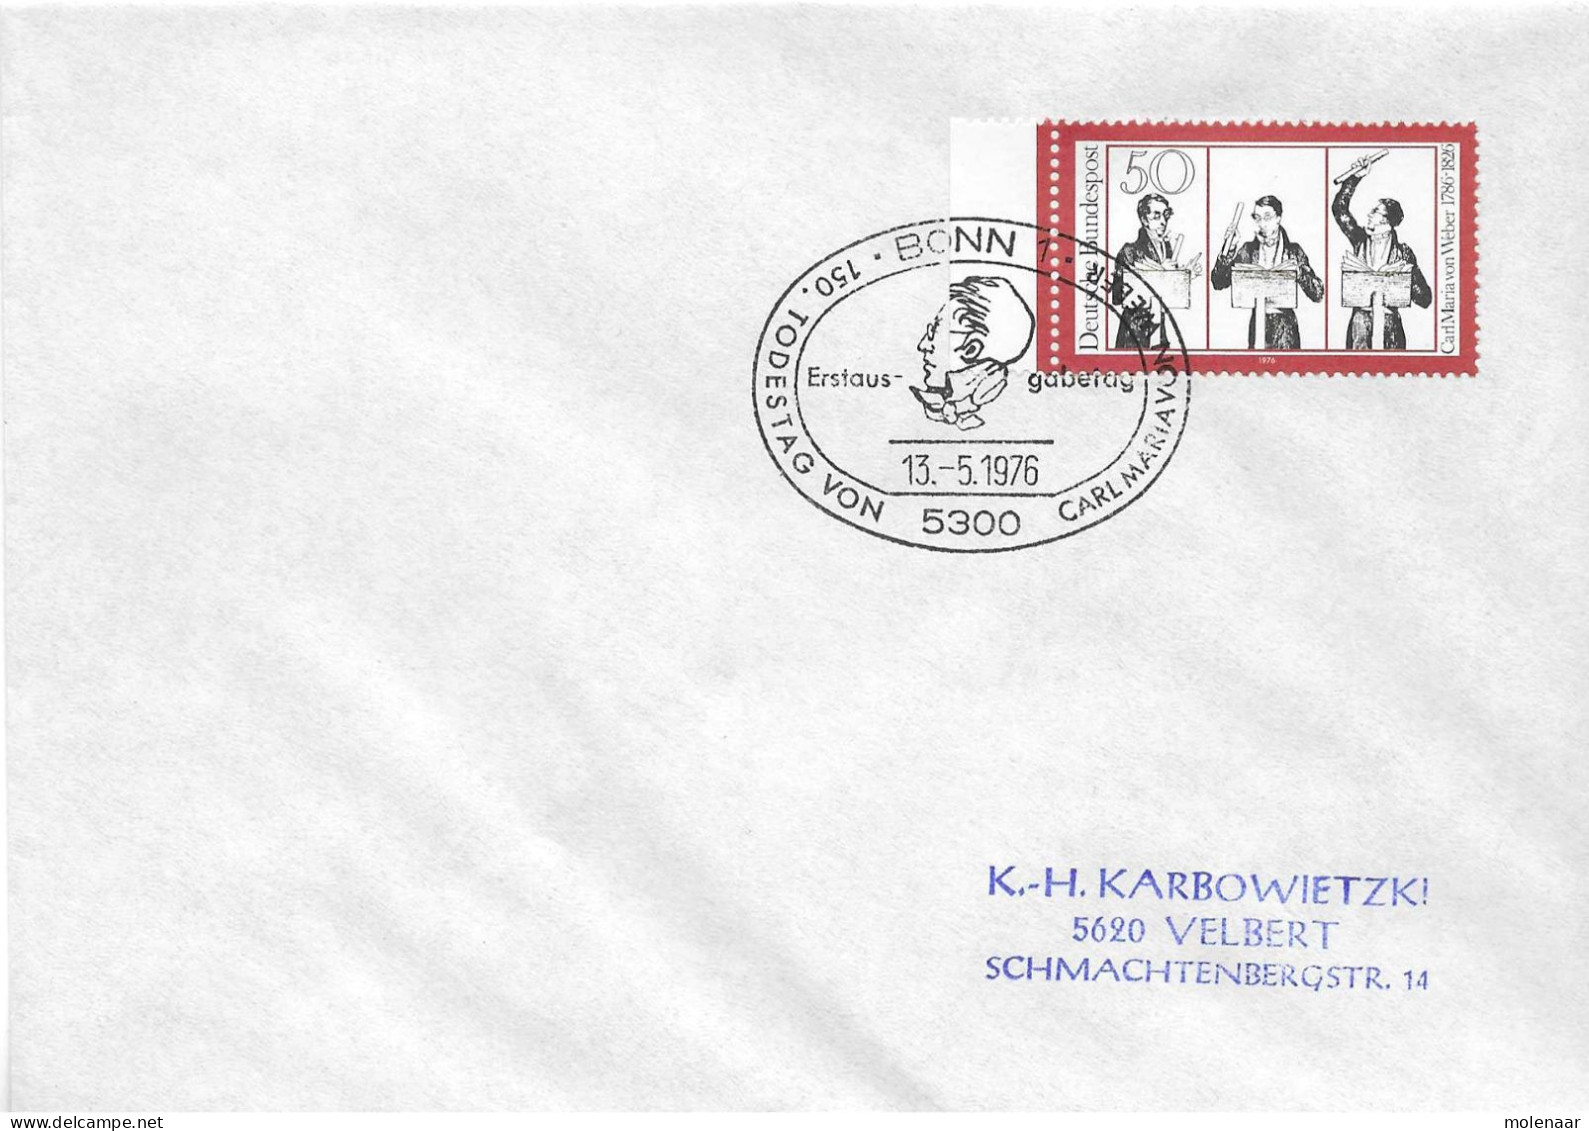 Postzegels > Europa > Duitsland > West-Duitsland > 1970-1979 > Brief Met No. 894  (17354) - Covers & Documents